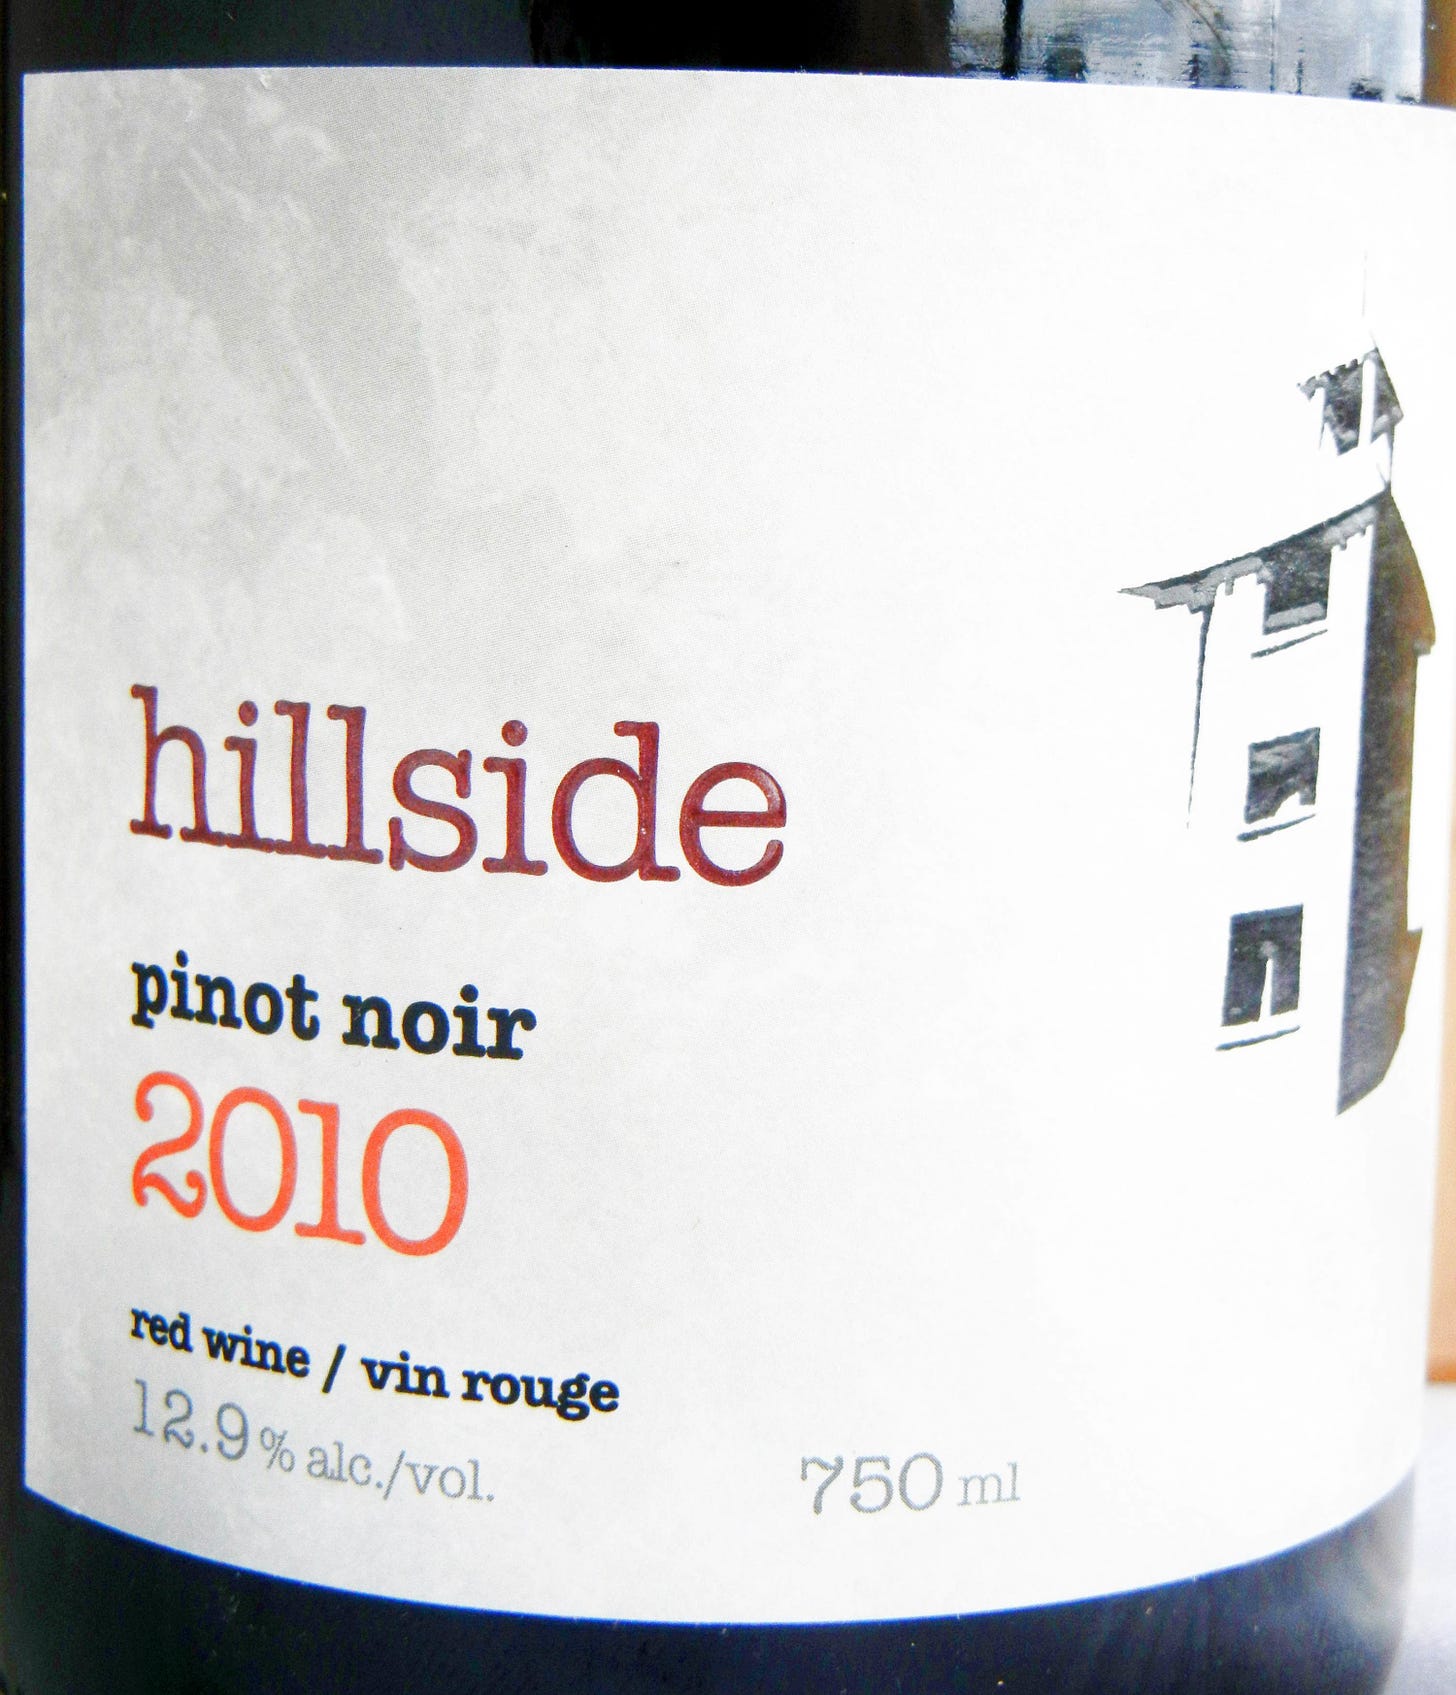 Hillside Pinot Noir 2010 Label - BC Pinot Noir Tasting Review 14